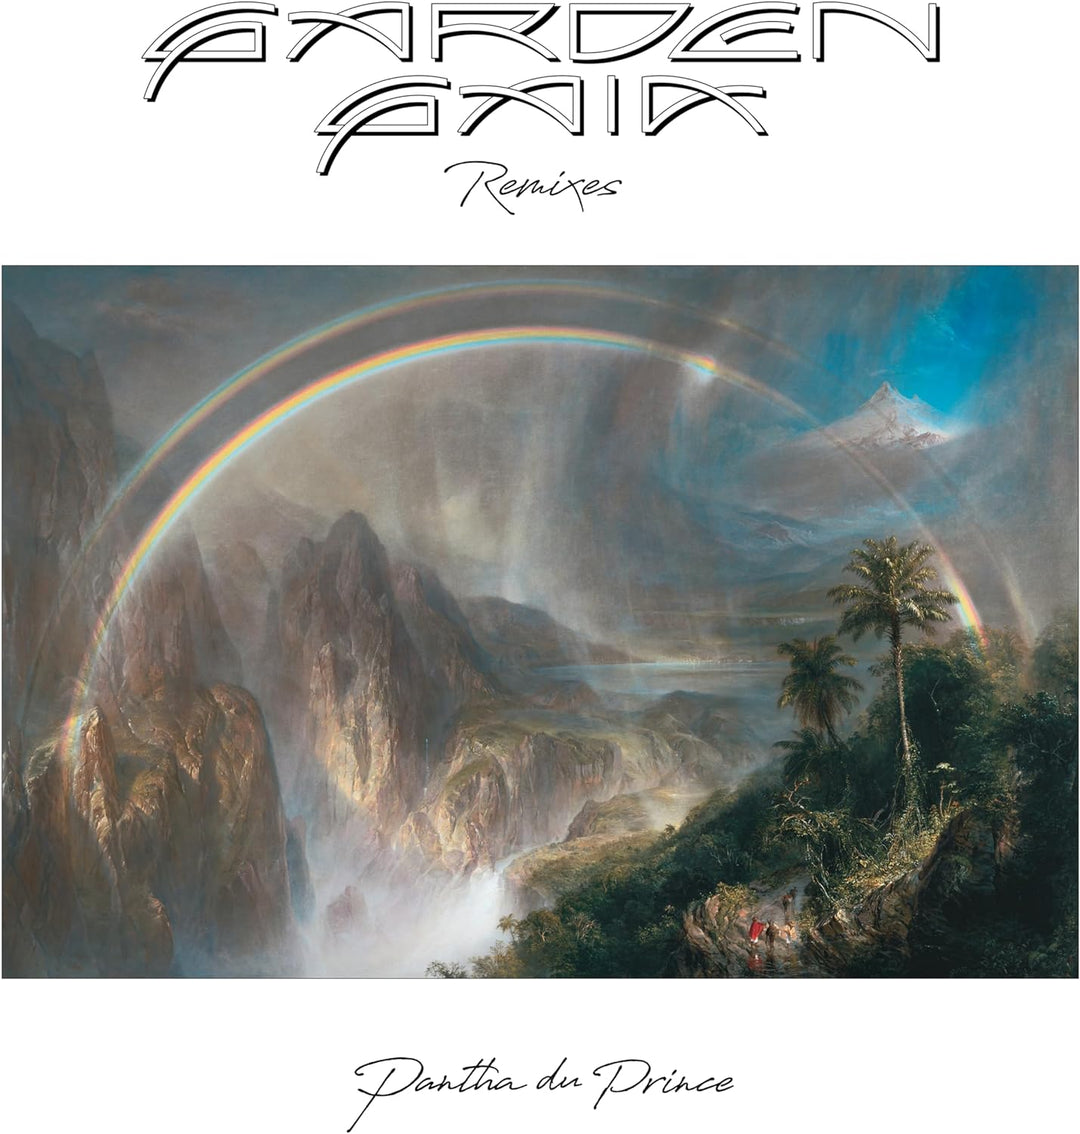 Pantha du Prince - Garden Gaia Remixes [VINYL]